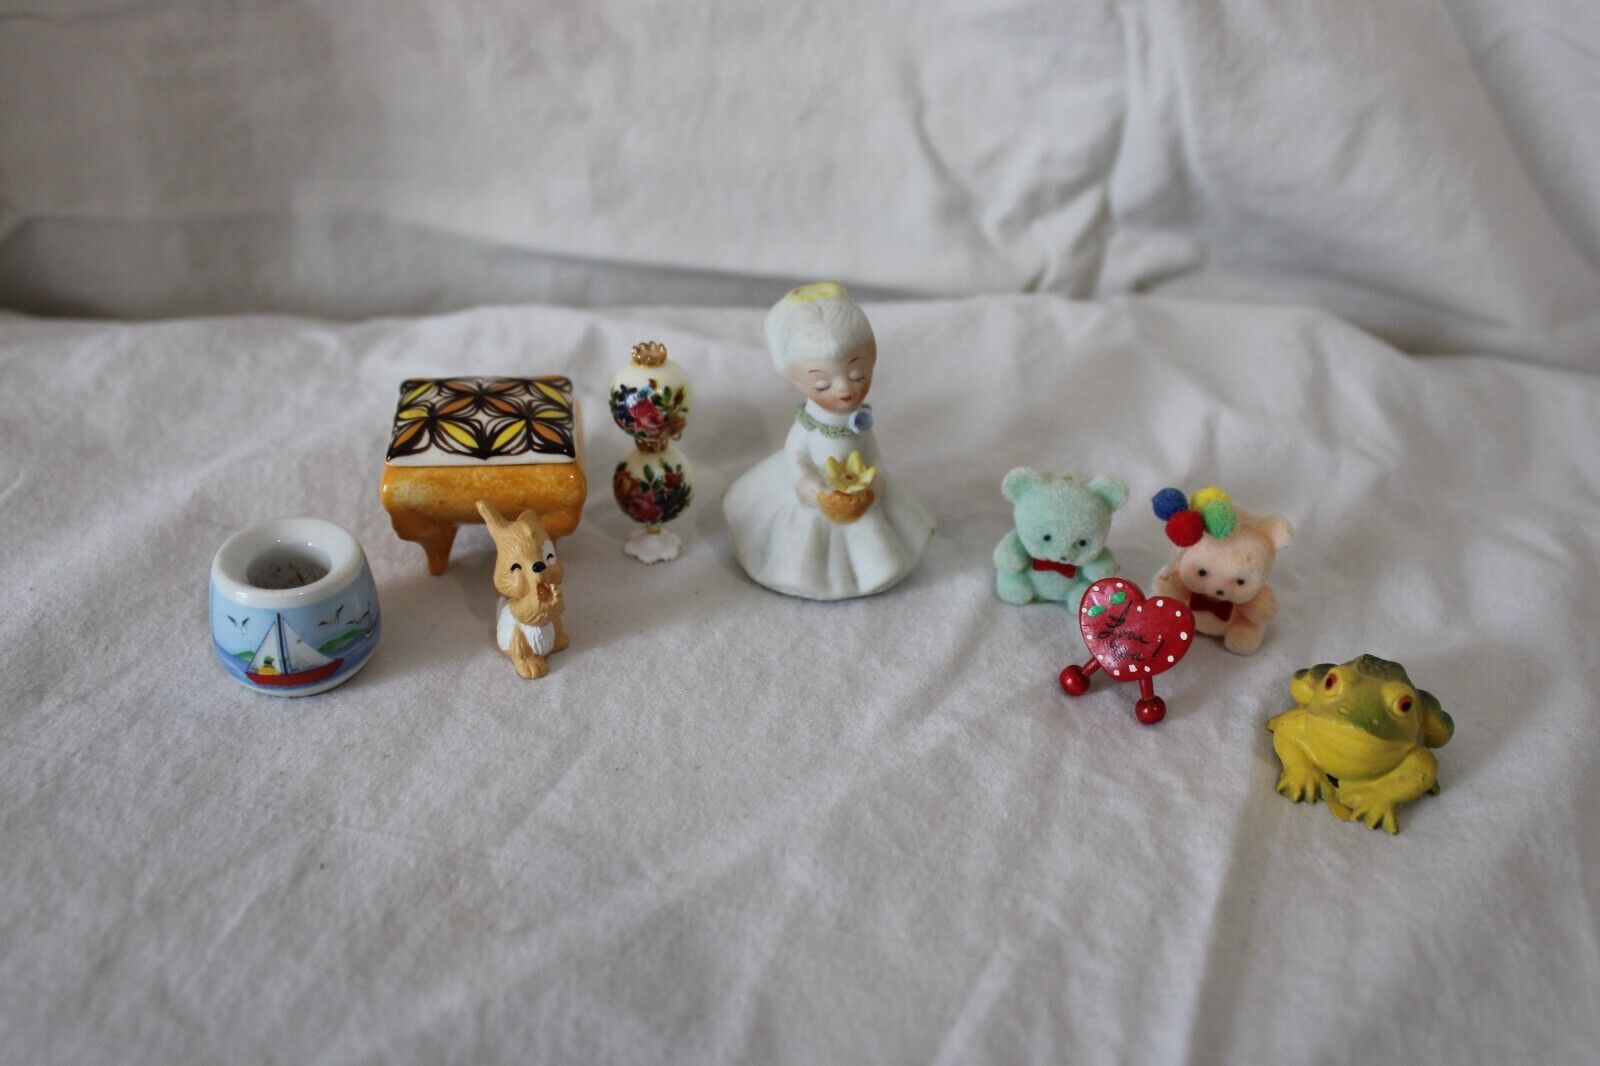 9 Miniature Collectible Figurines, Bunny, Bears, Girl, Heart, Frog +